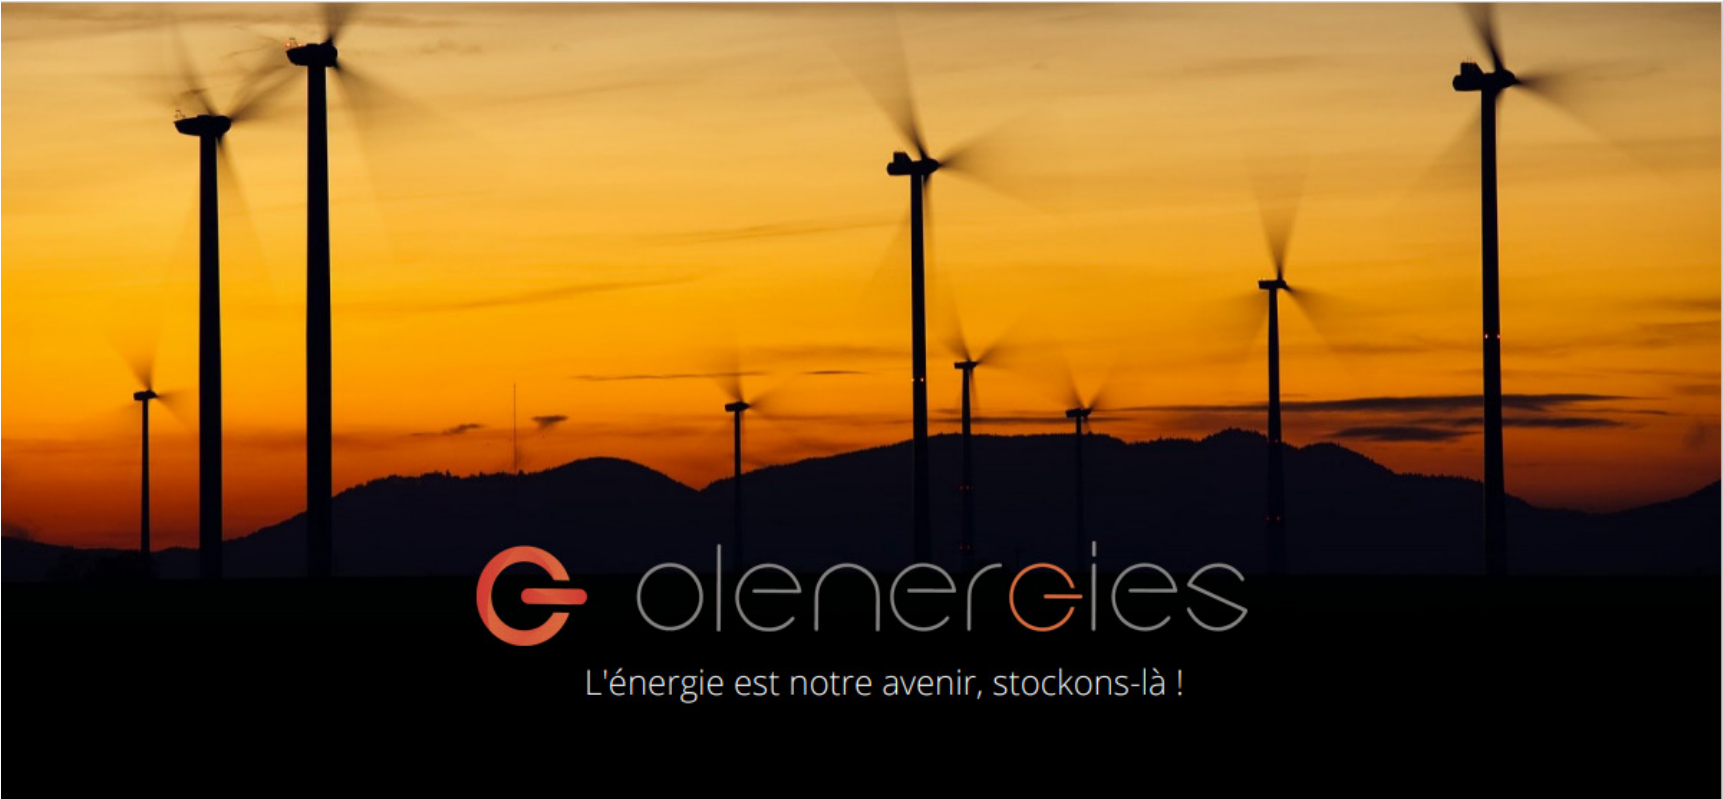 Image fond eoliennes logo Olenergies